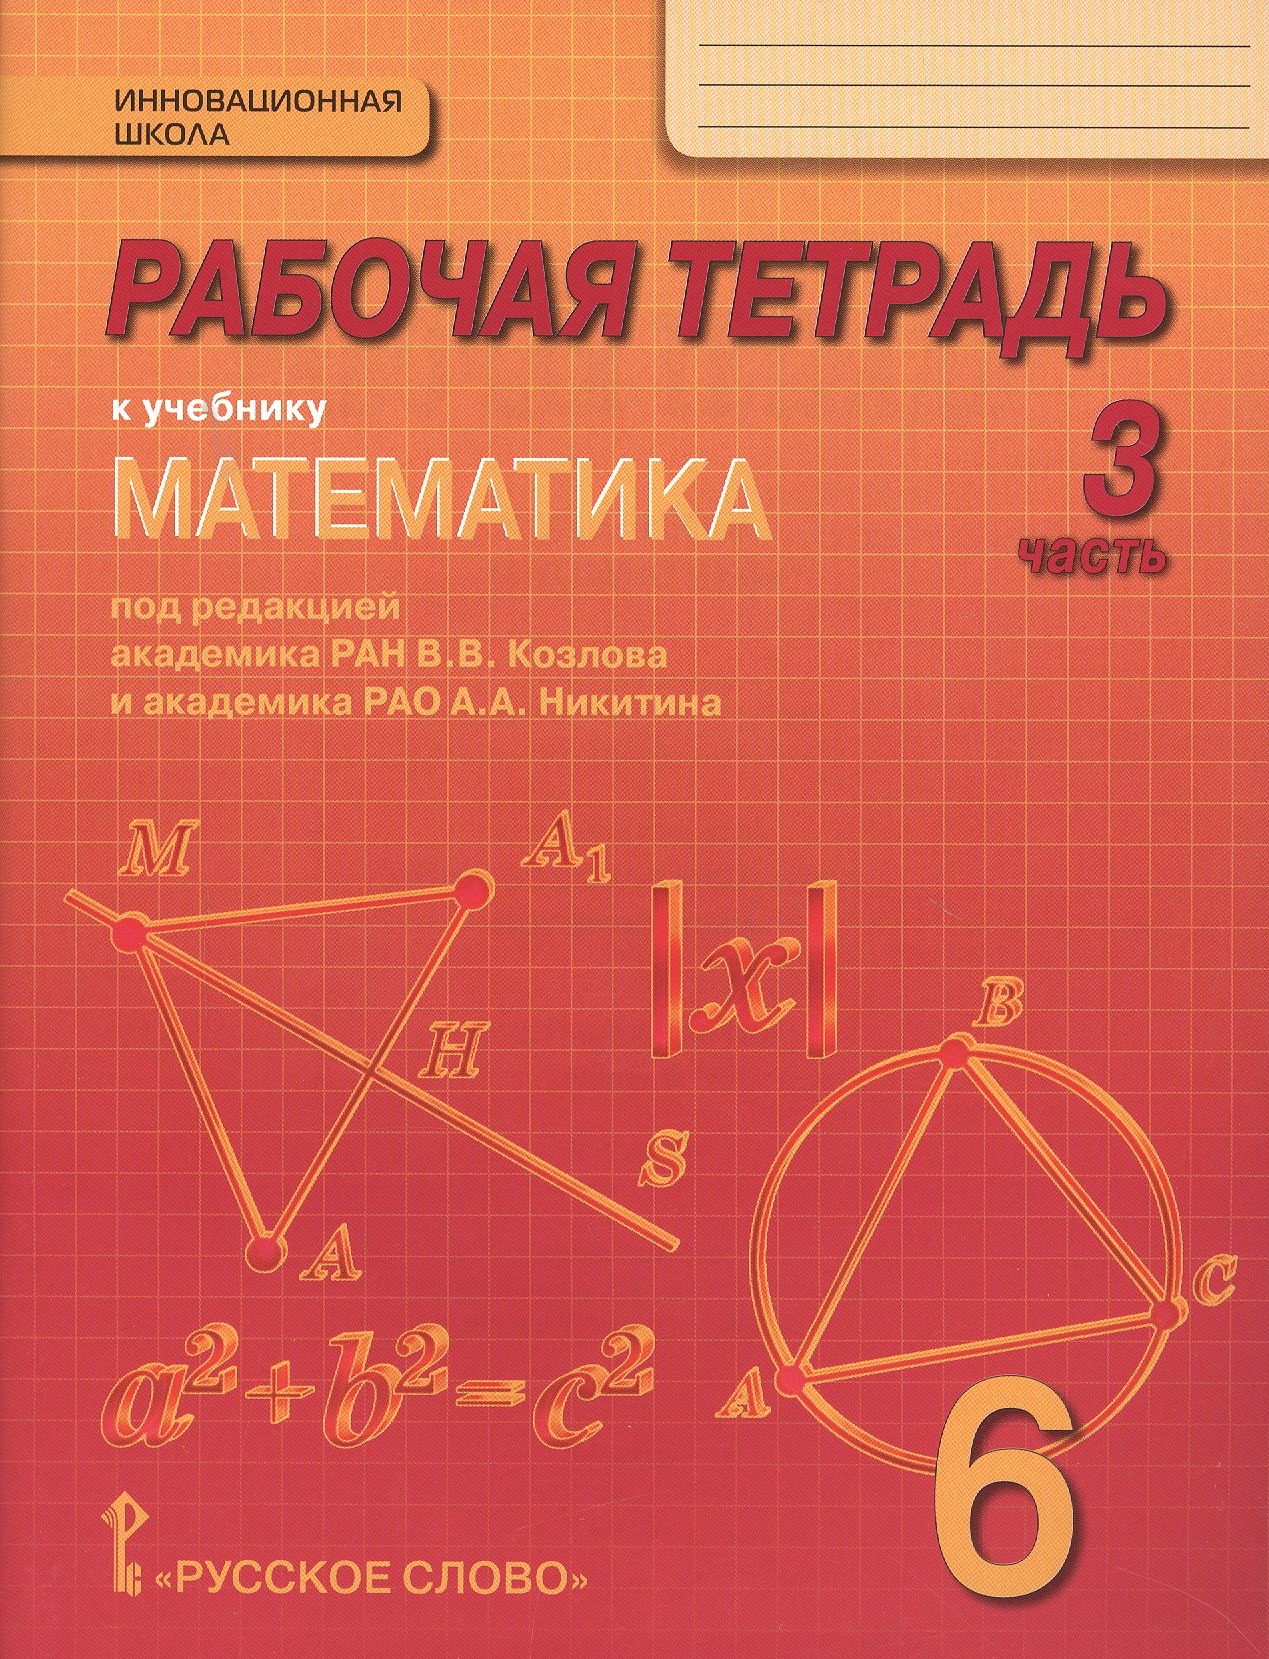 Матиматика учебник. Учебник математики. Книга математика. Дидактическая тетрадь по математике. Учебник математики 6 класс.